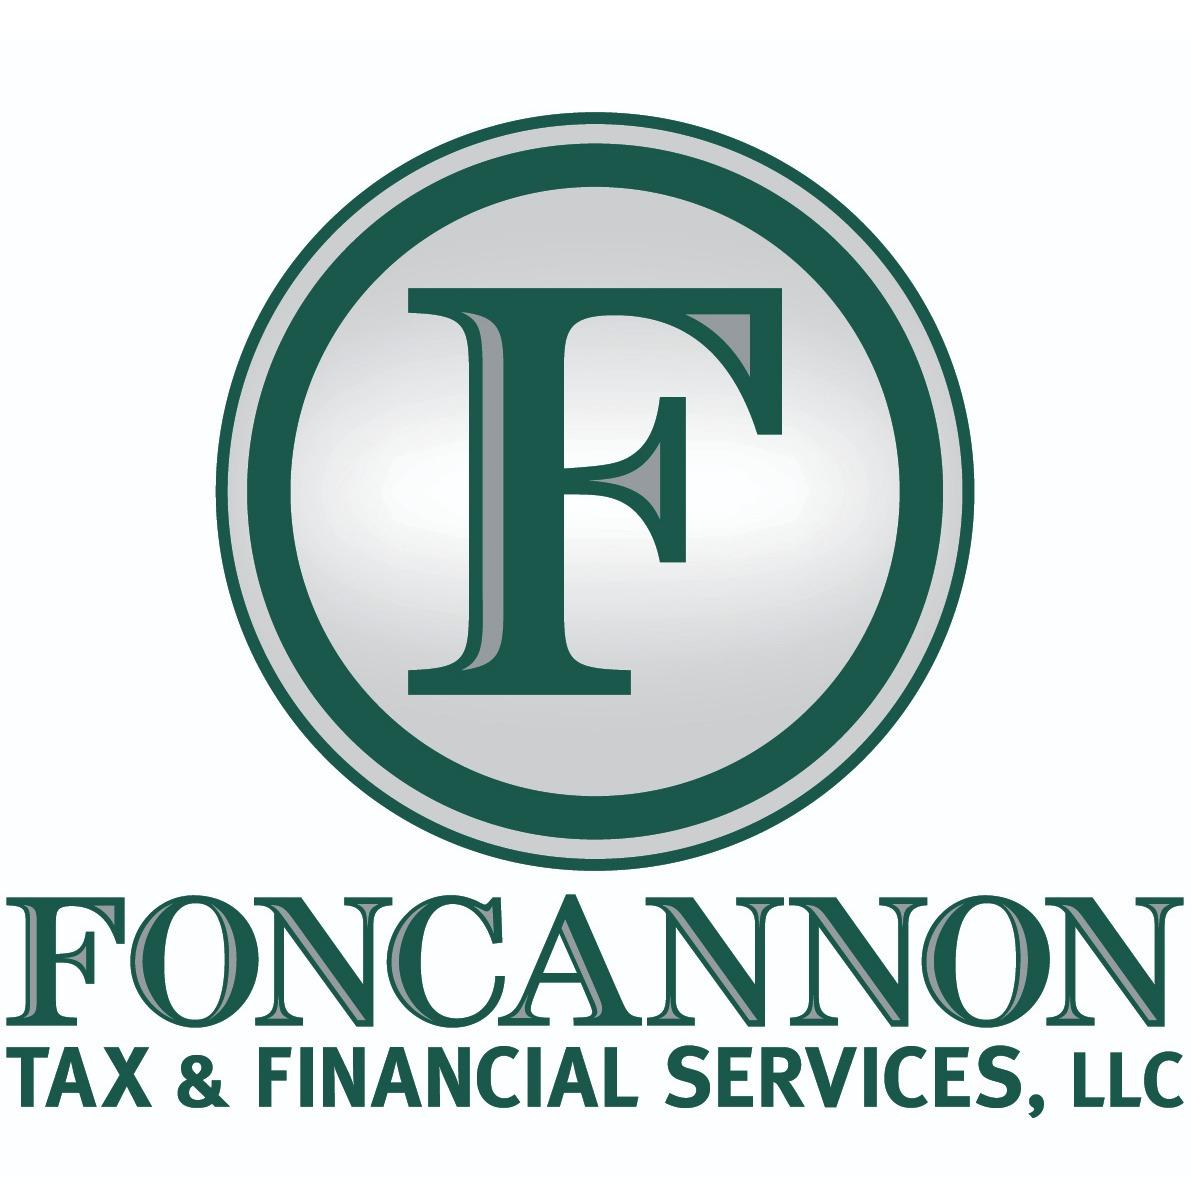 Foncannon Tax & Financial Services, LLC Logo